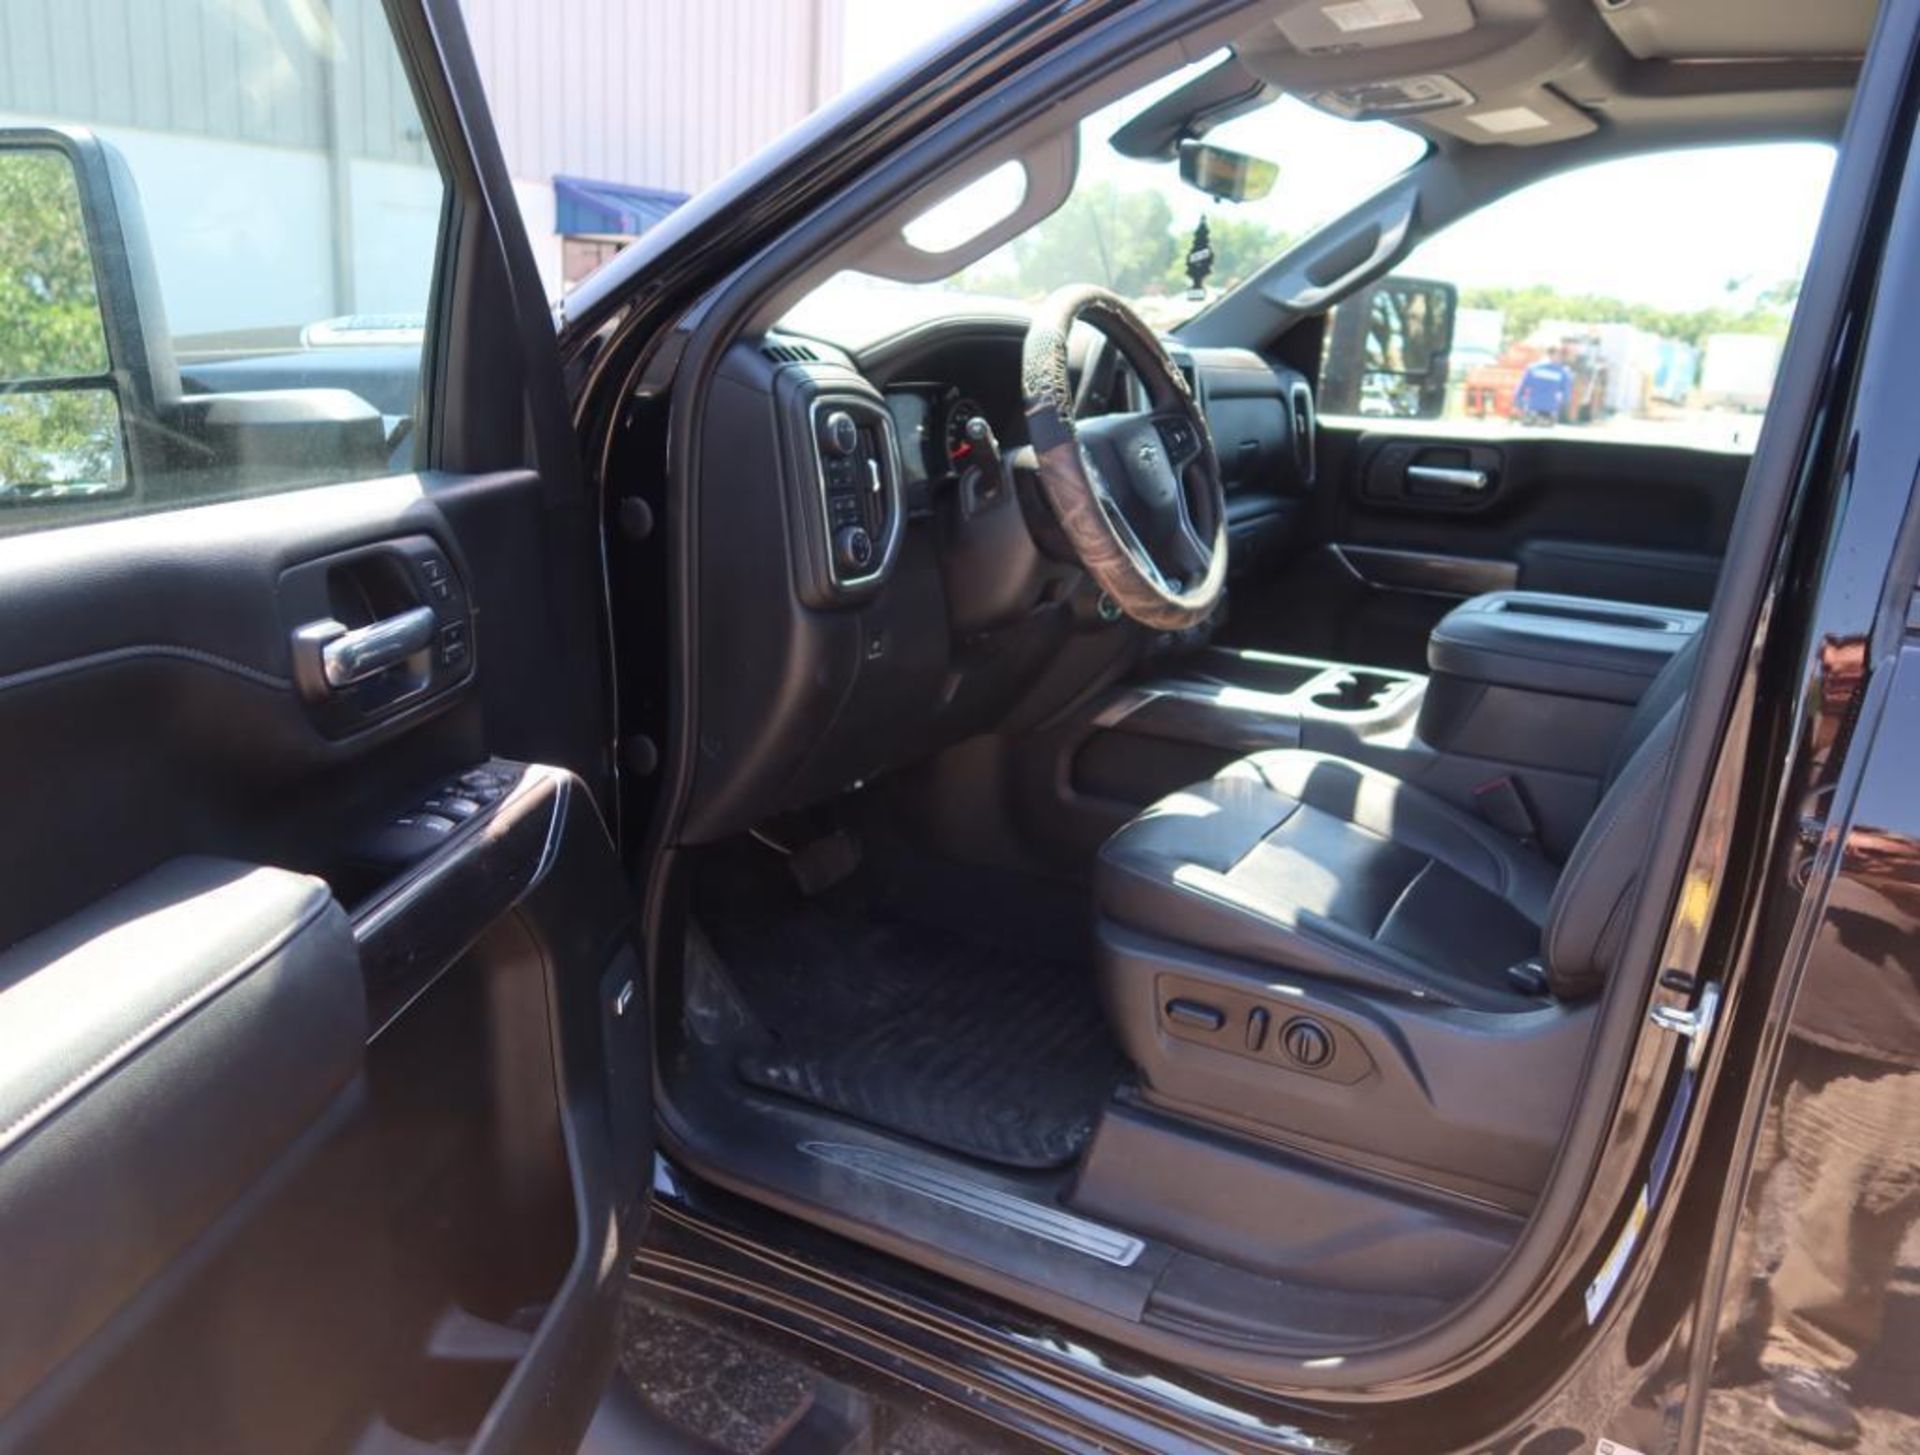 2021 Chevy Silverado 2500 4WD Z71 Crew Cab (Black) Tool Box, Diesel, License# QJZ-Q58VIN 1GC4YPEY0MF - Image 8 of 15